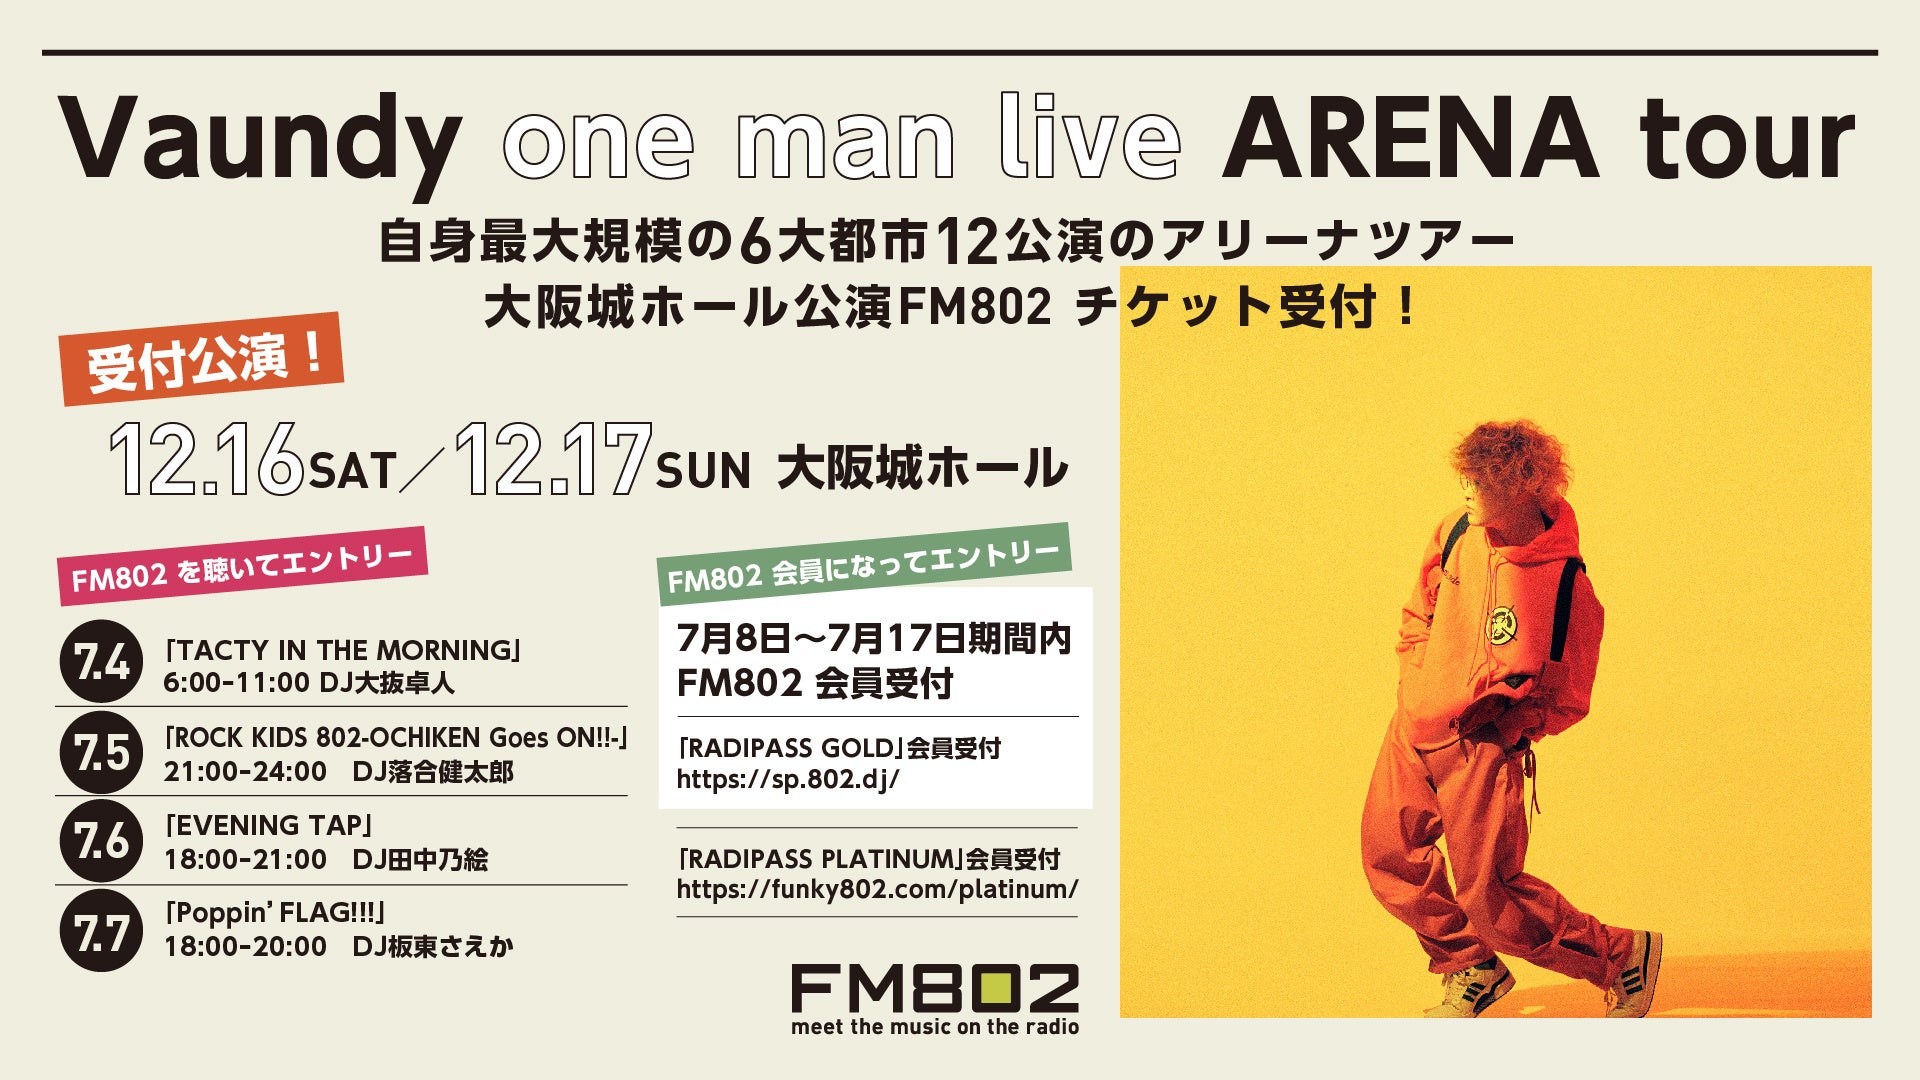 「Vaundy one man live ARENA tour」自身最大規模の6大都市12公演のアリーナツアー大阪城ホール公演FM802でチケット受付！